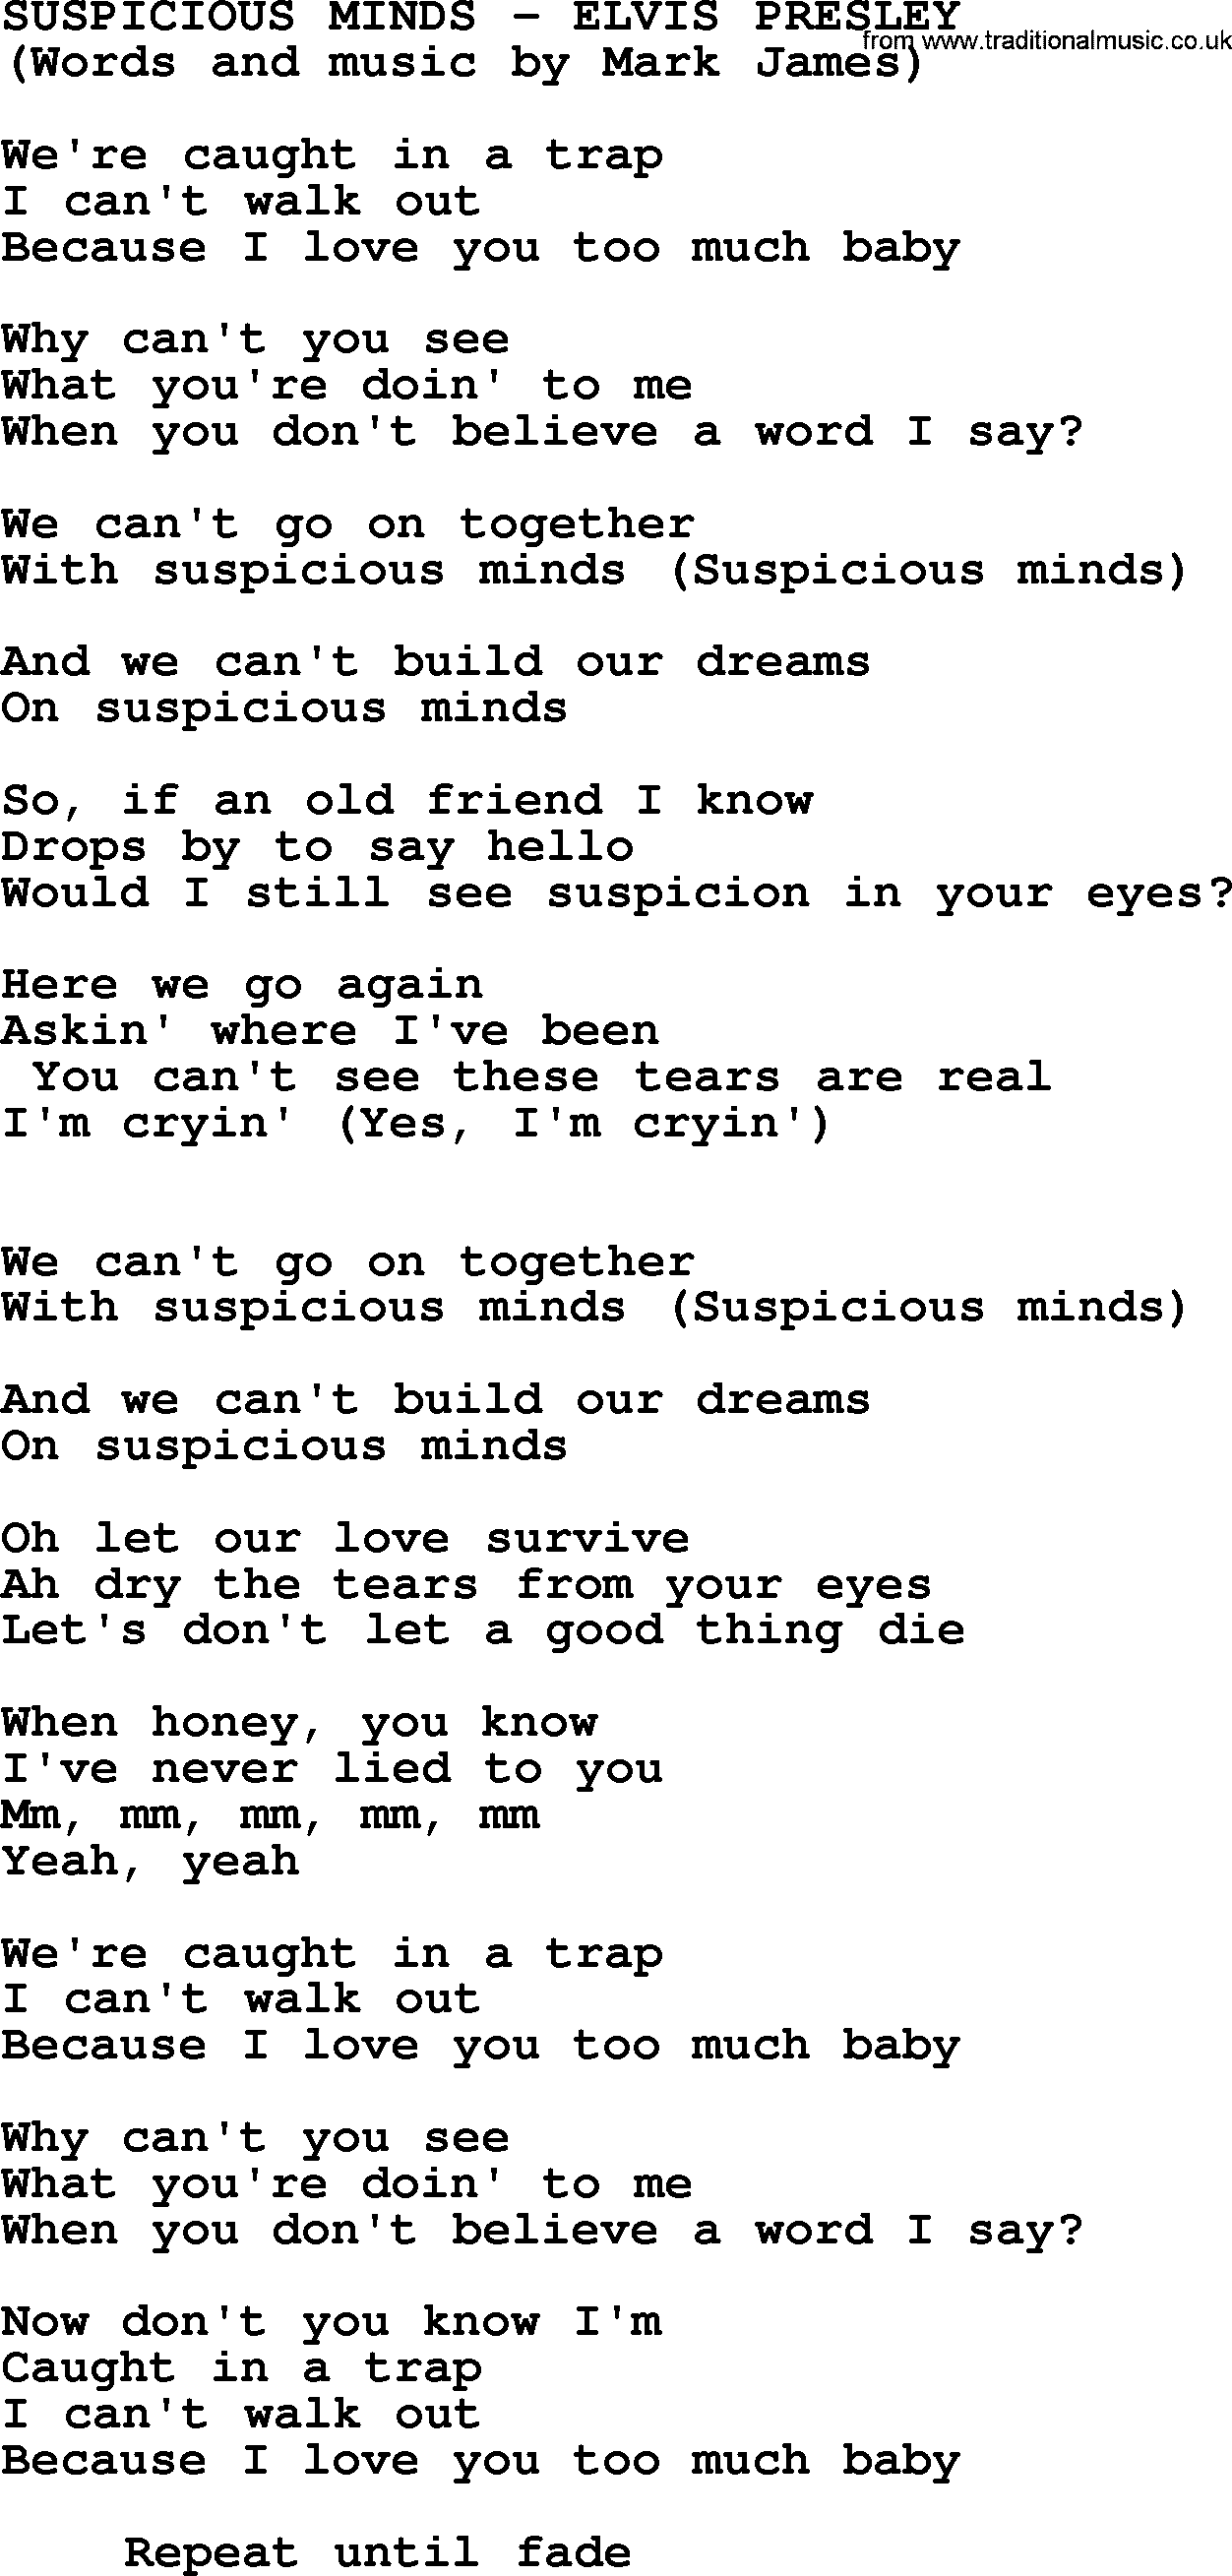 Elvis Presley song: Suspicious Minds lyrics